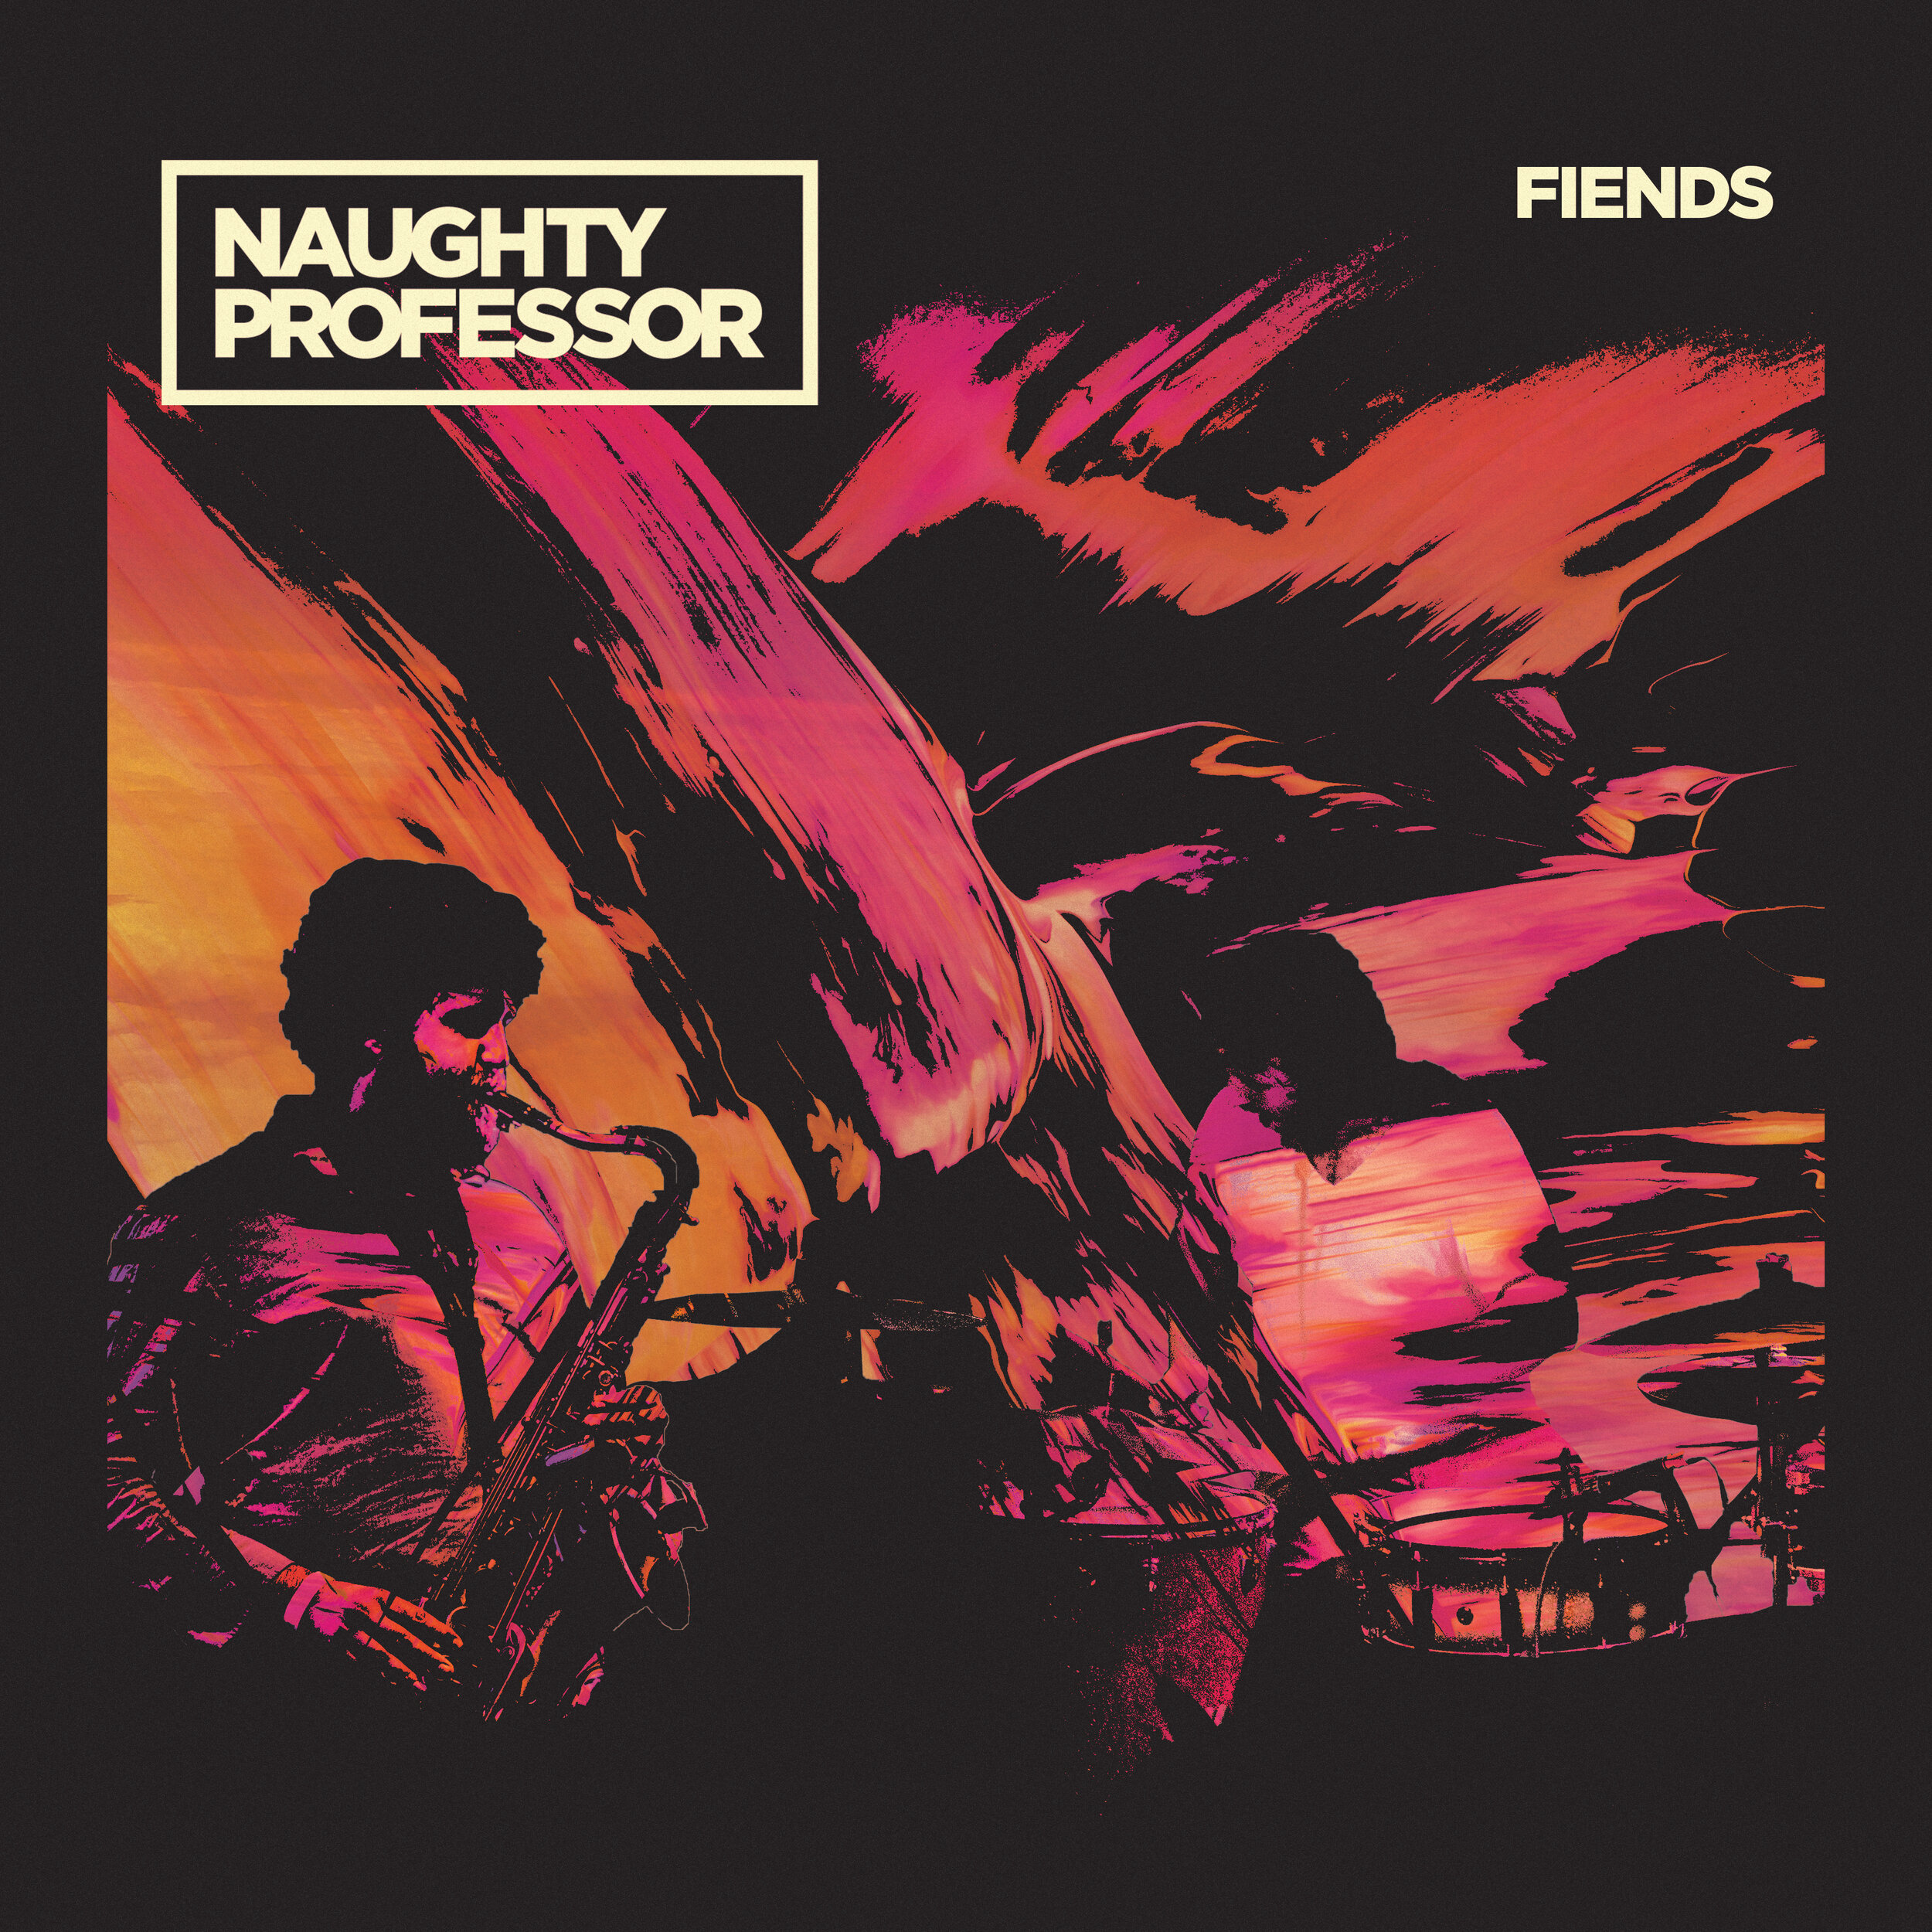 Naughty Professor - Fiends